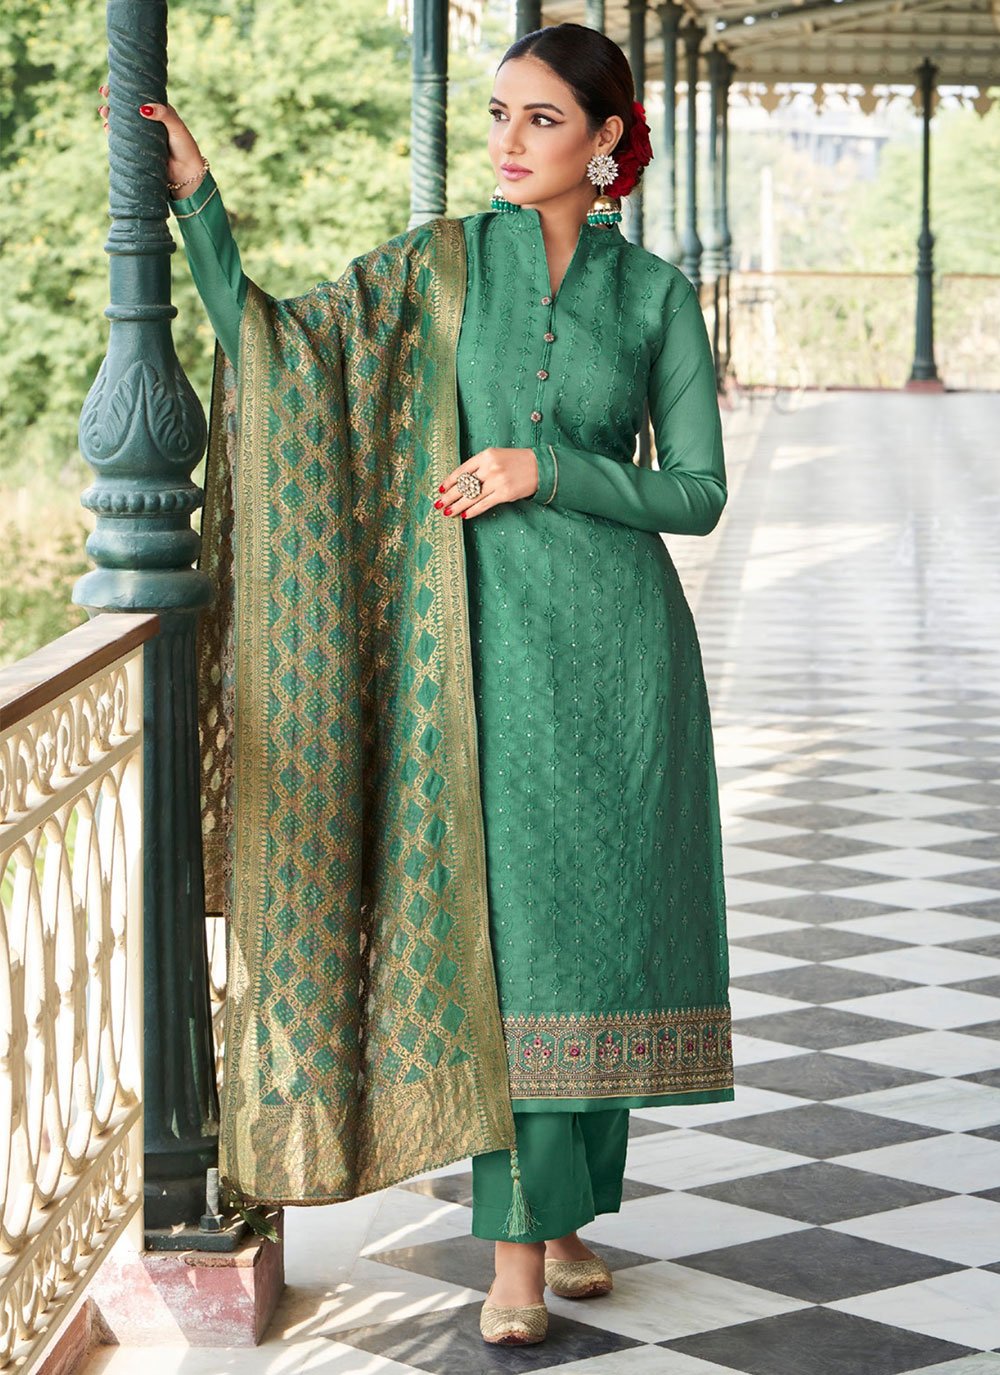  Jasmin Bhasin Embroidered Green Designer Palazzo Salwar Suit